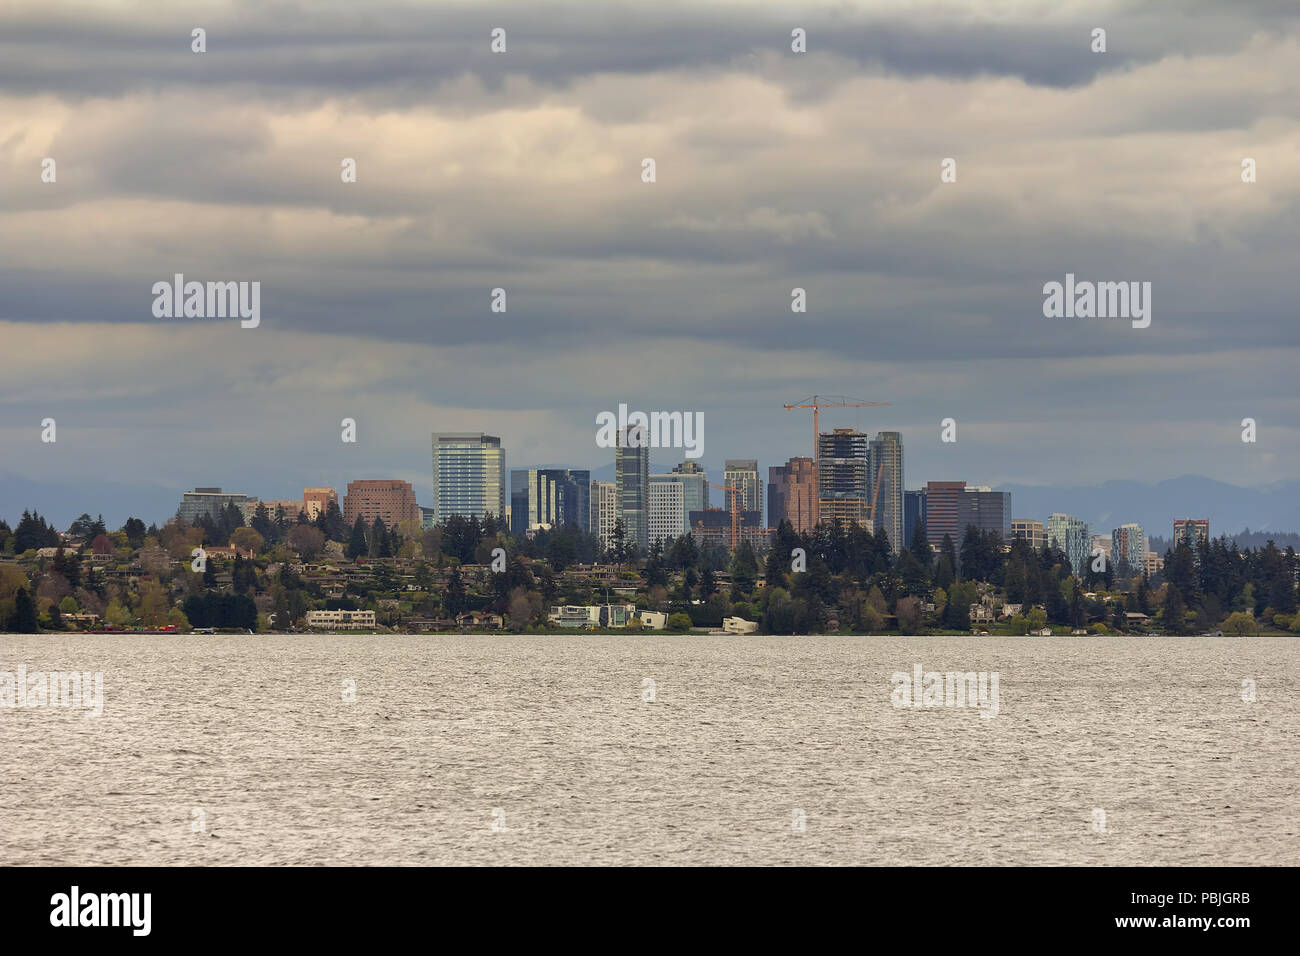 City of Bellevue Washington skyline along Lake Washington Stock Photo